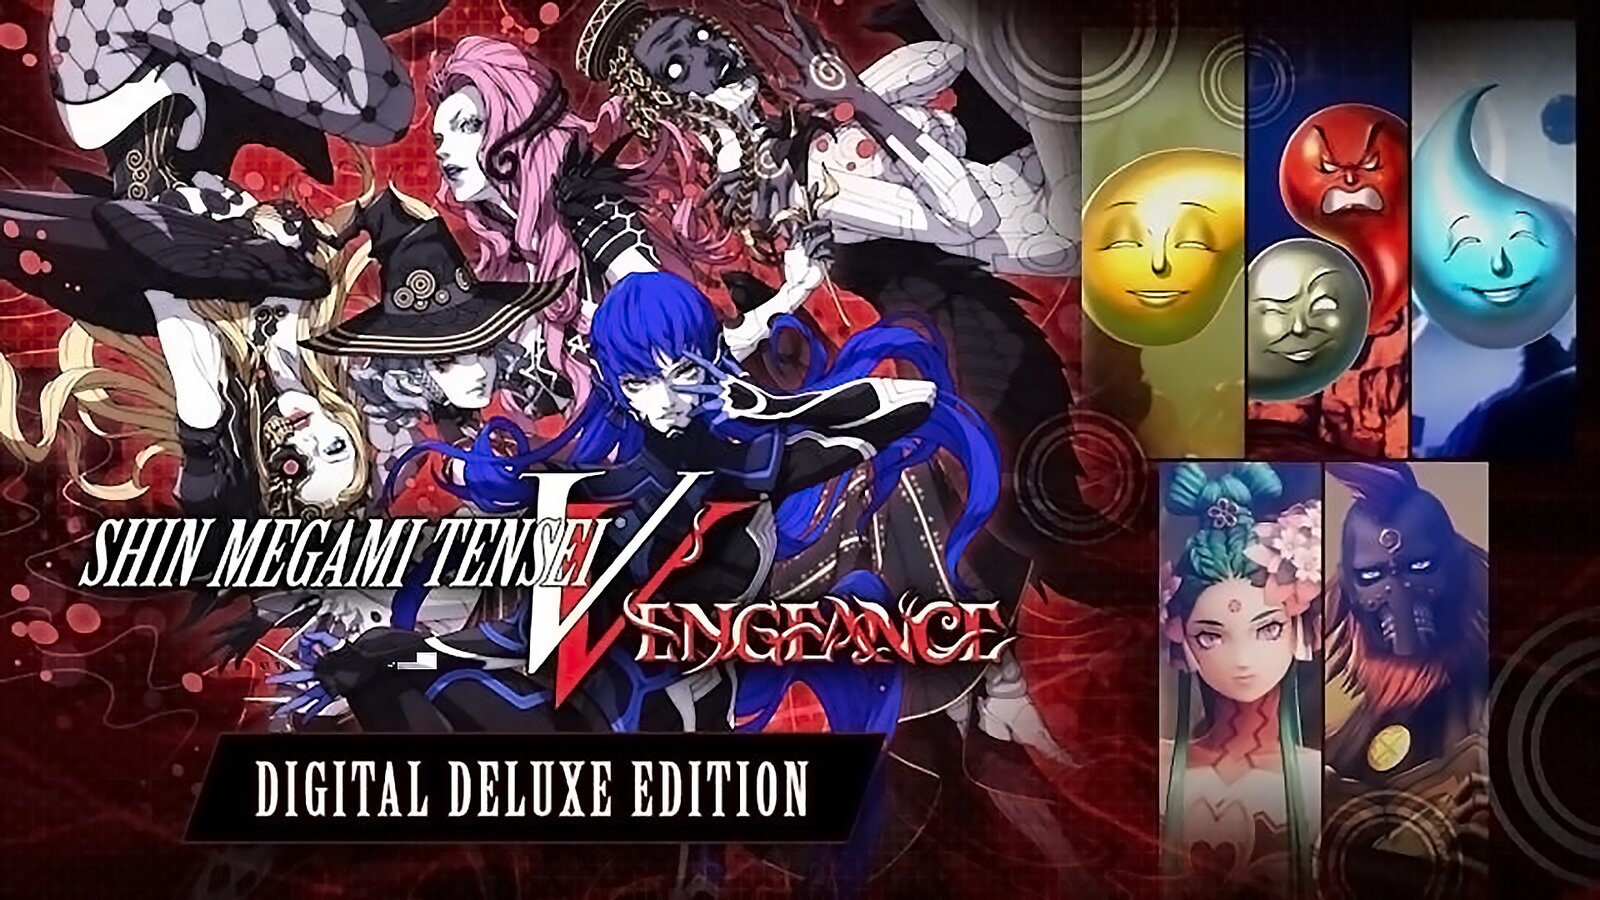 Shin Megami Tensei V: Vengeance - Digital Deluxe Edition